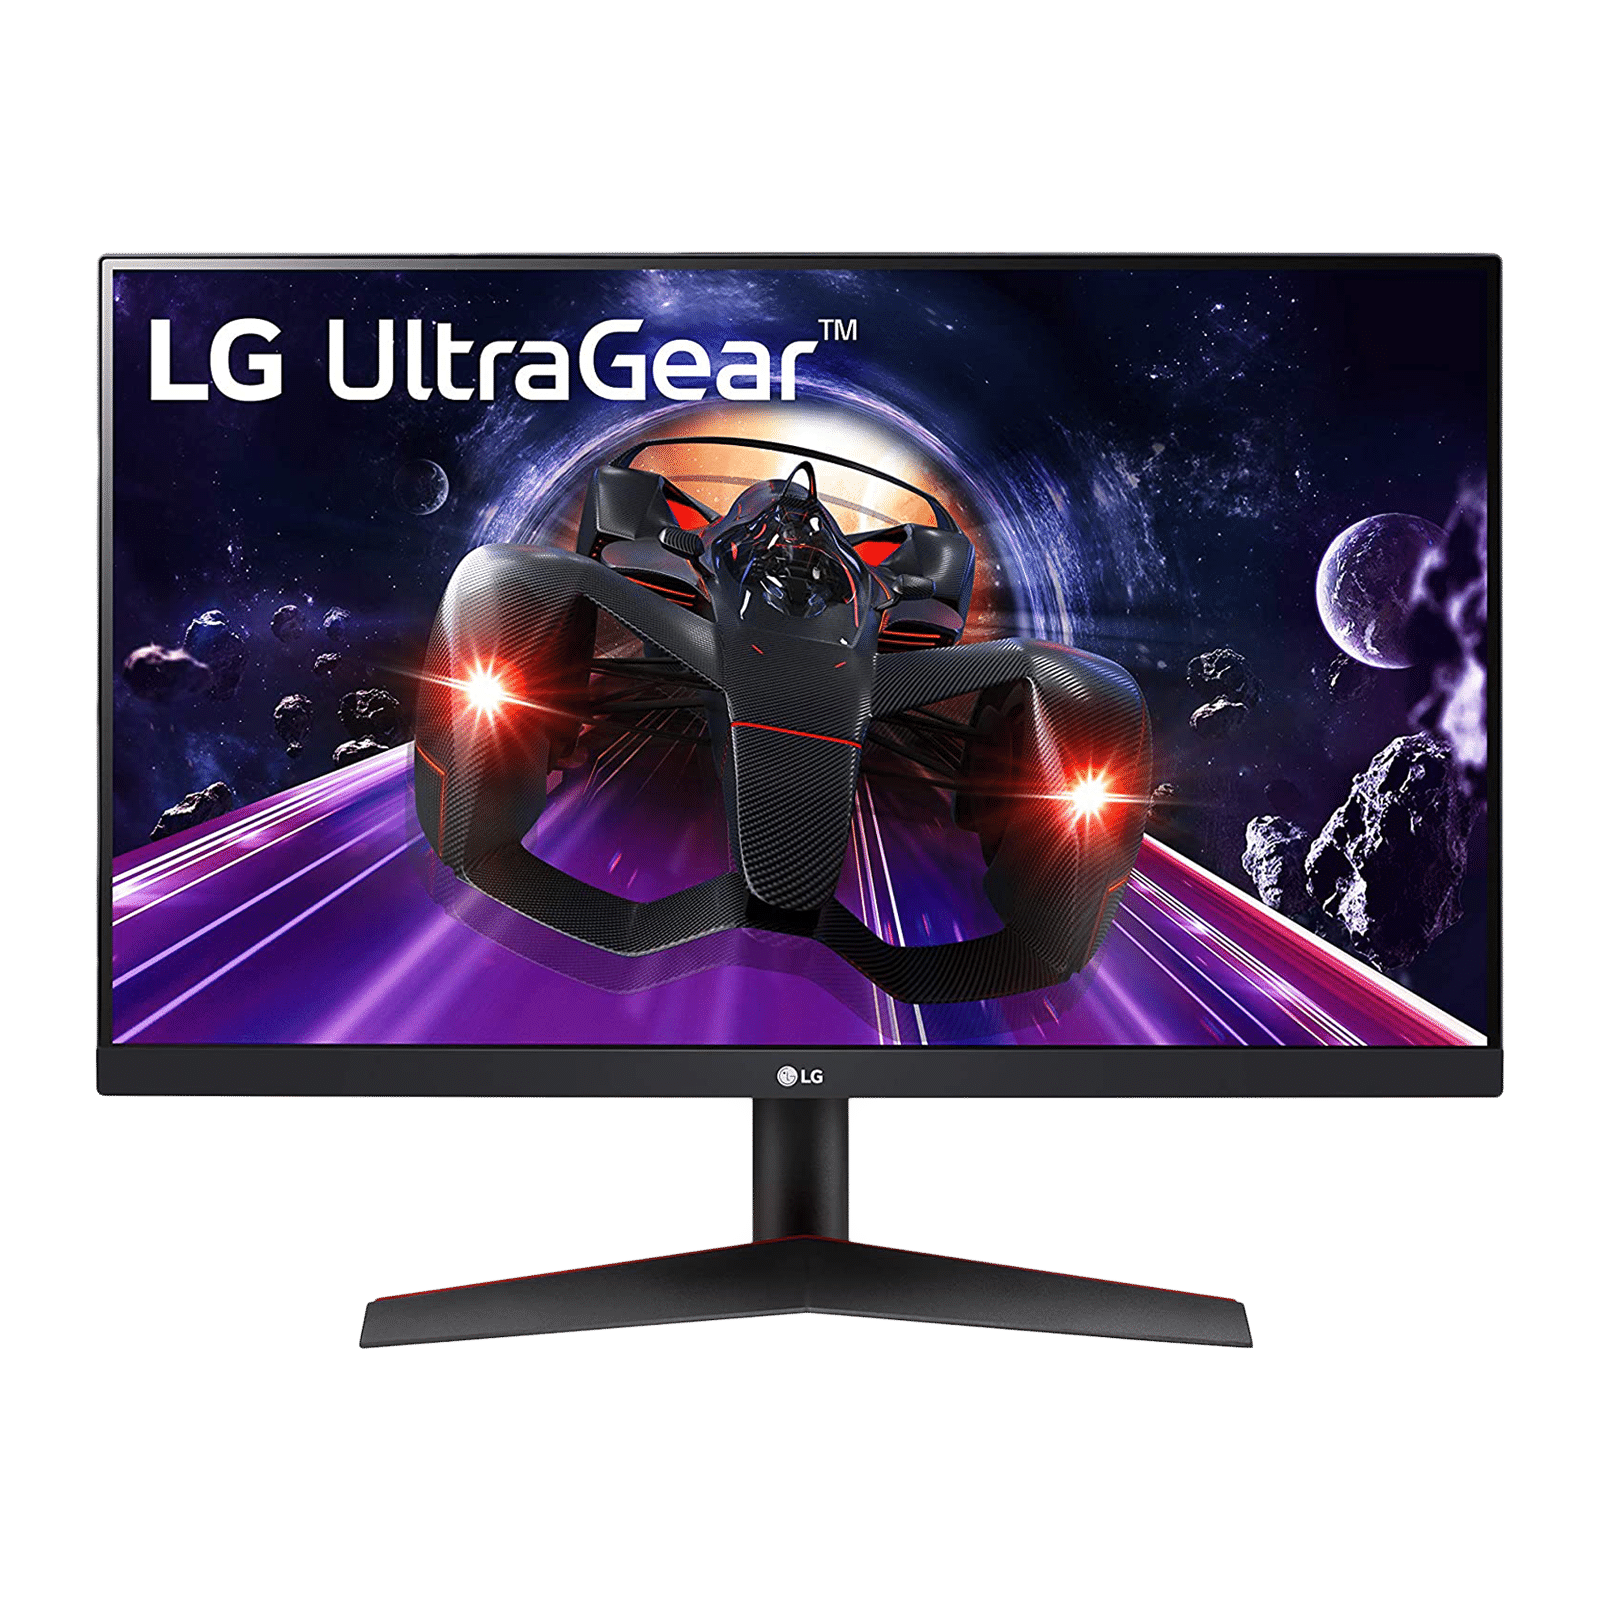 Buy LG UltraGear 60.45 cm (23.8 inch) Full HD IPS Panel LCD